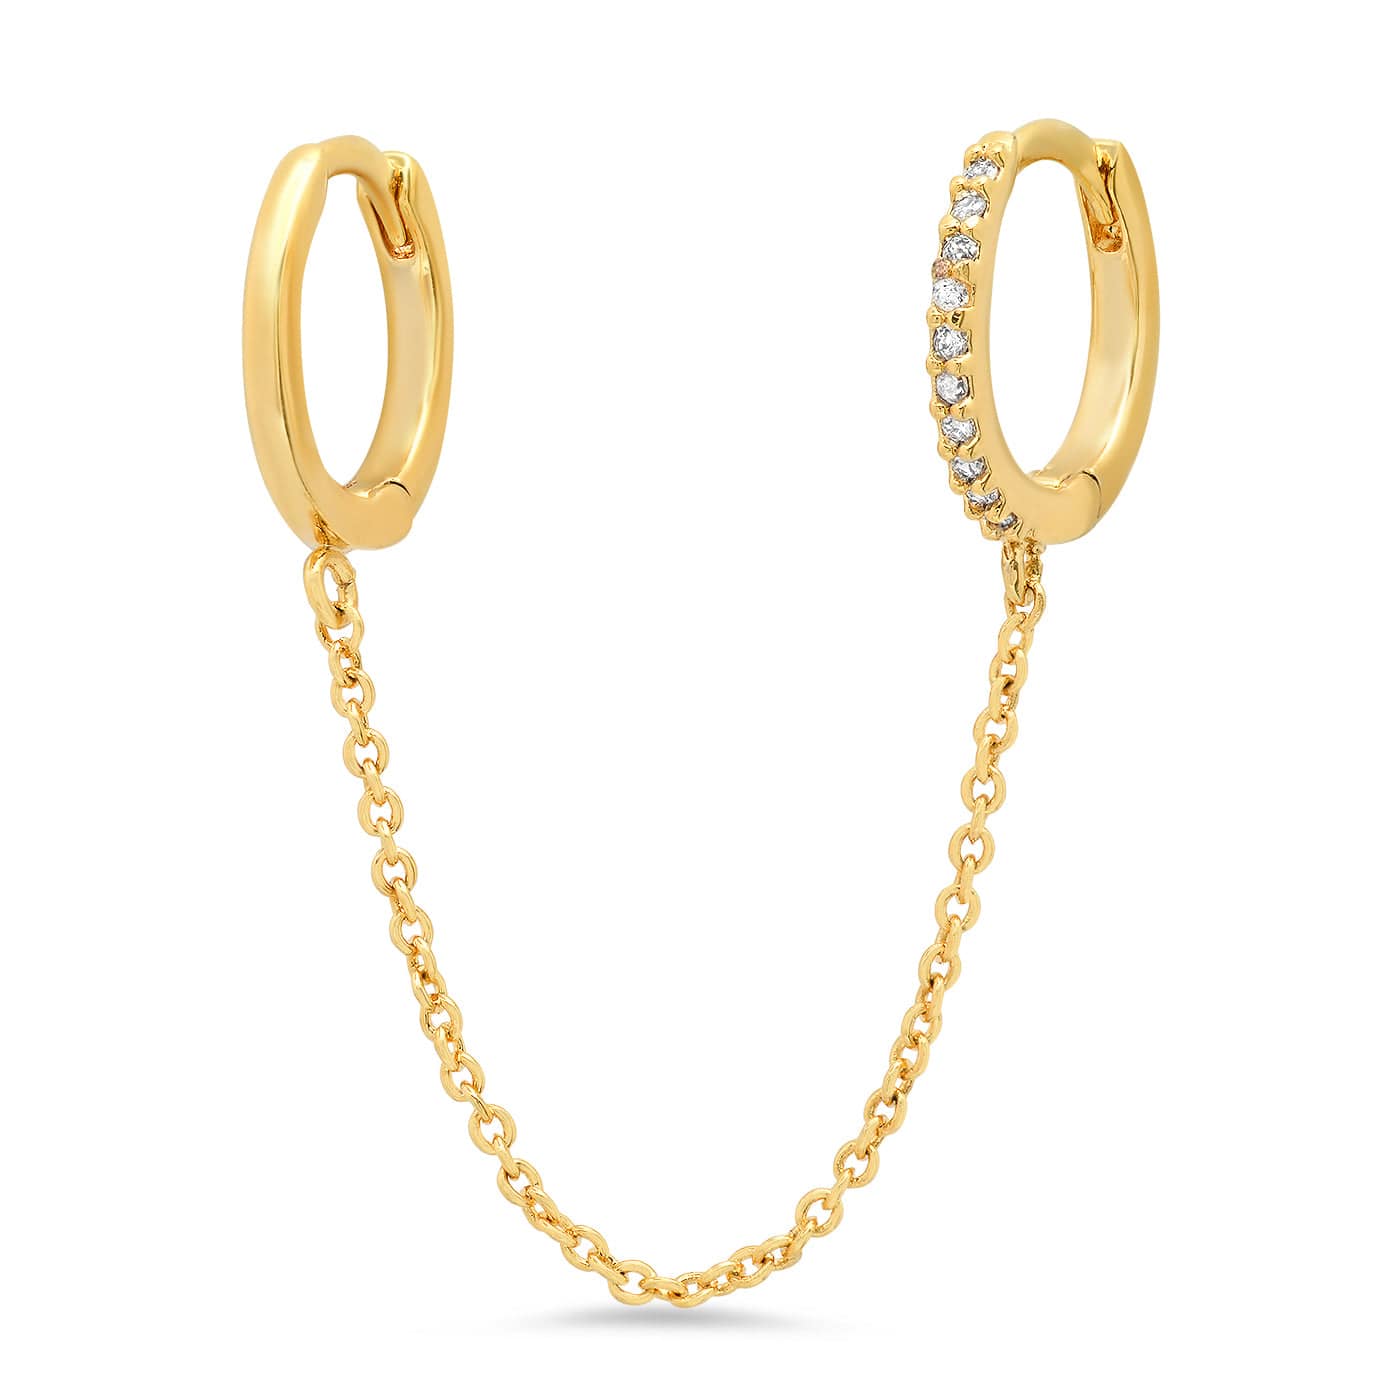 TAI JEWELRY Earrings Gold Double Huggies With Chain